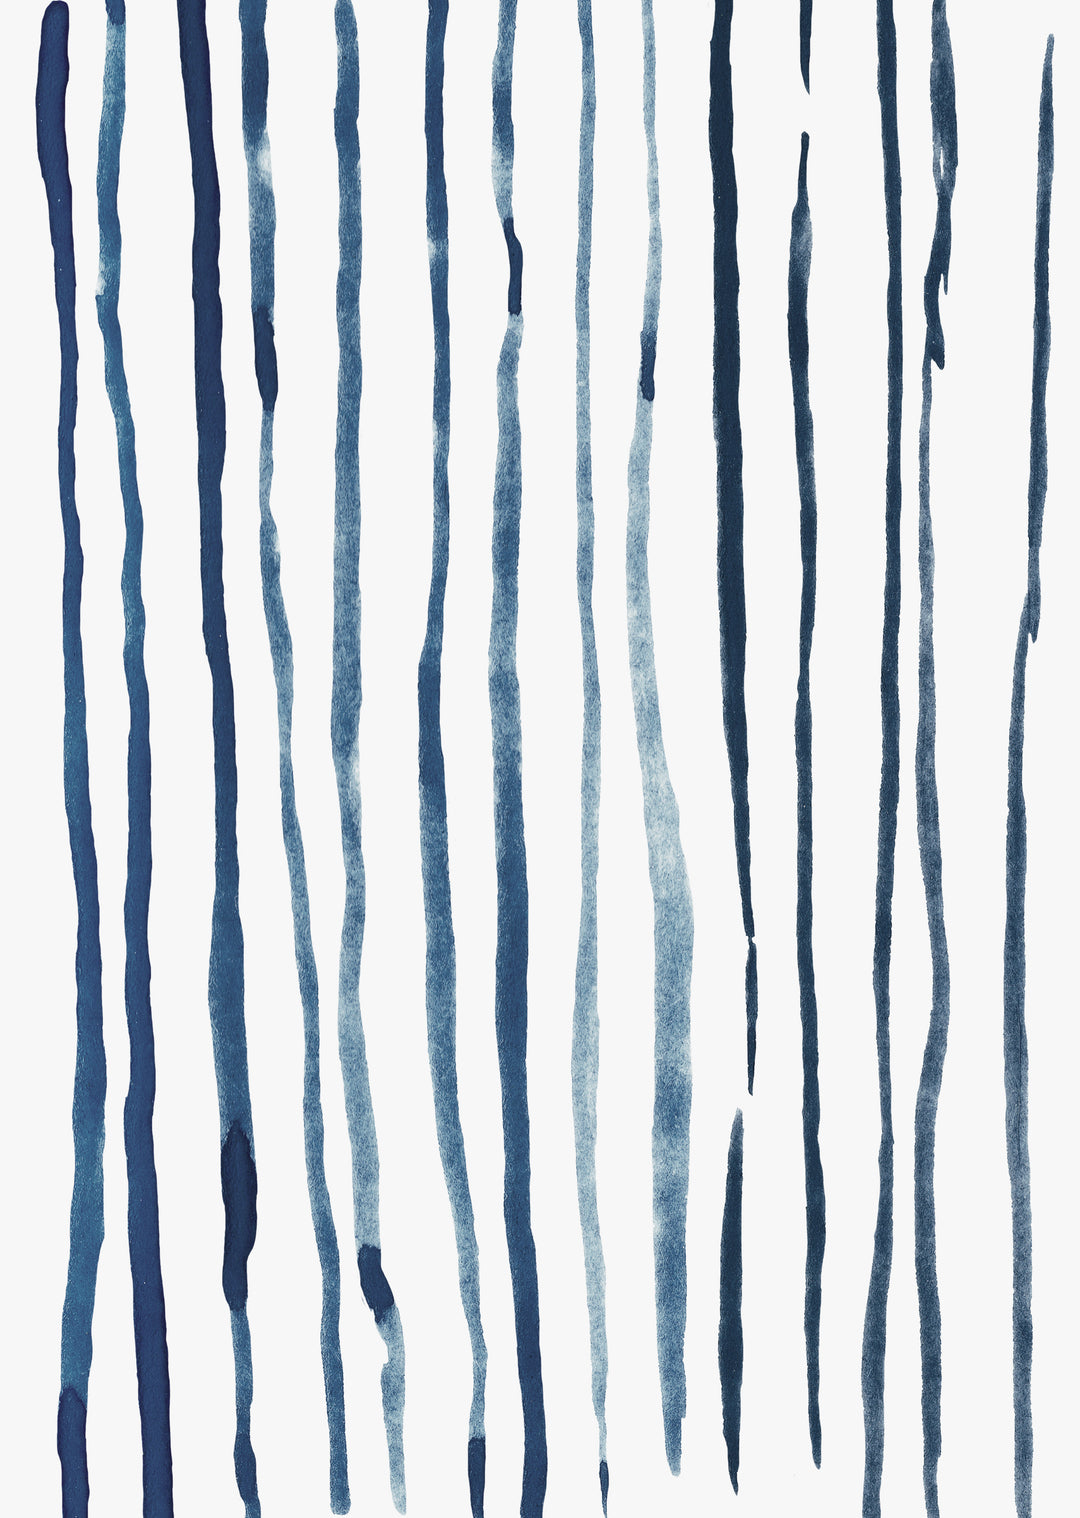 Blue Stripes Abstract Wall Art Print